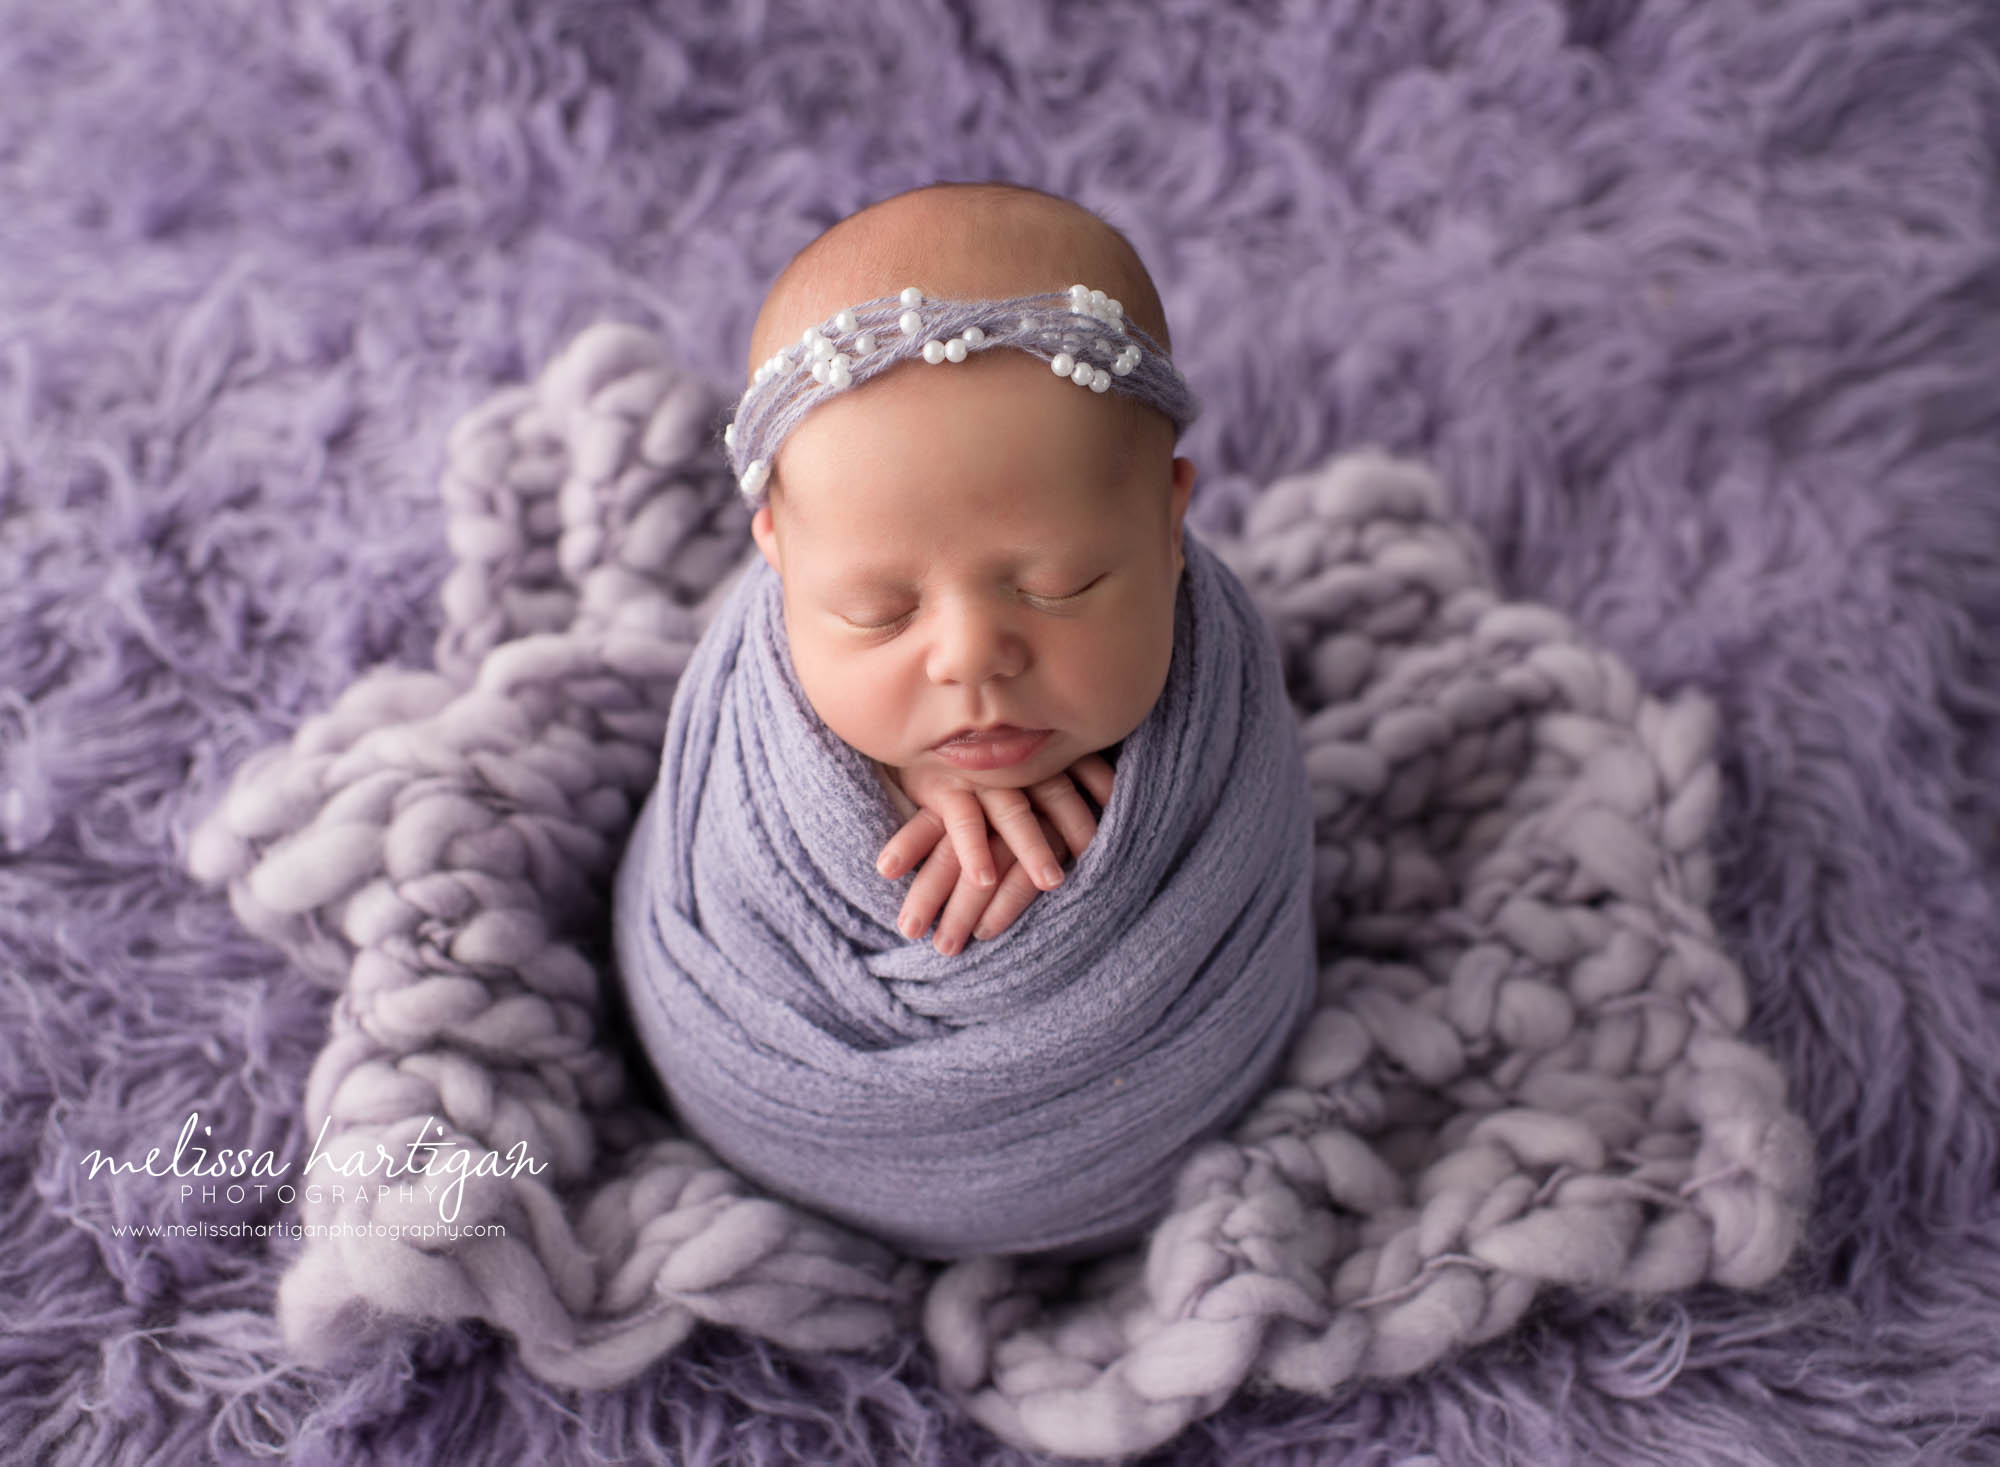 newborn baby girl swaddled in purple wrap posed on purple flokati rug